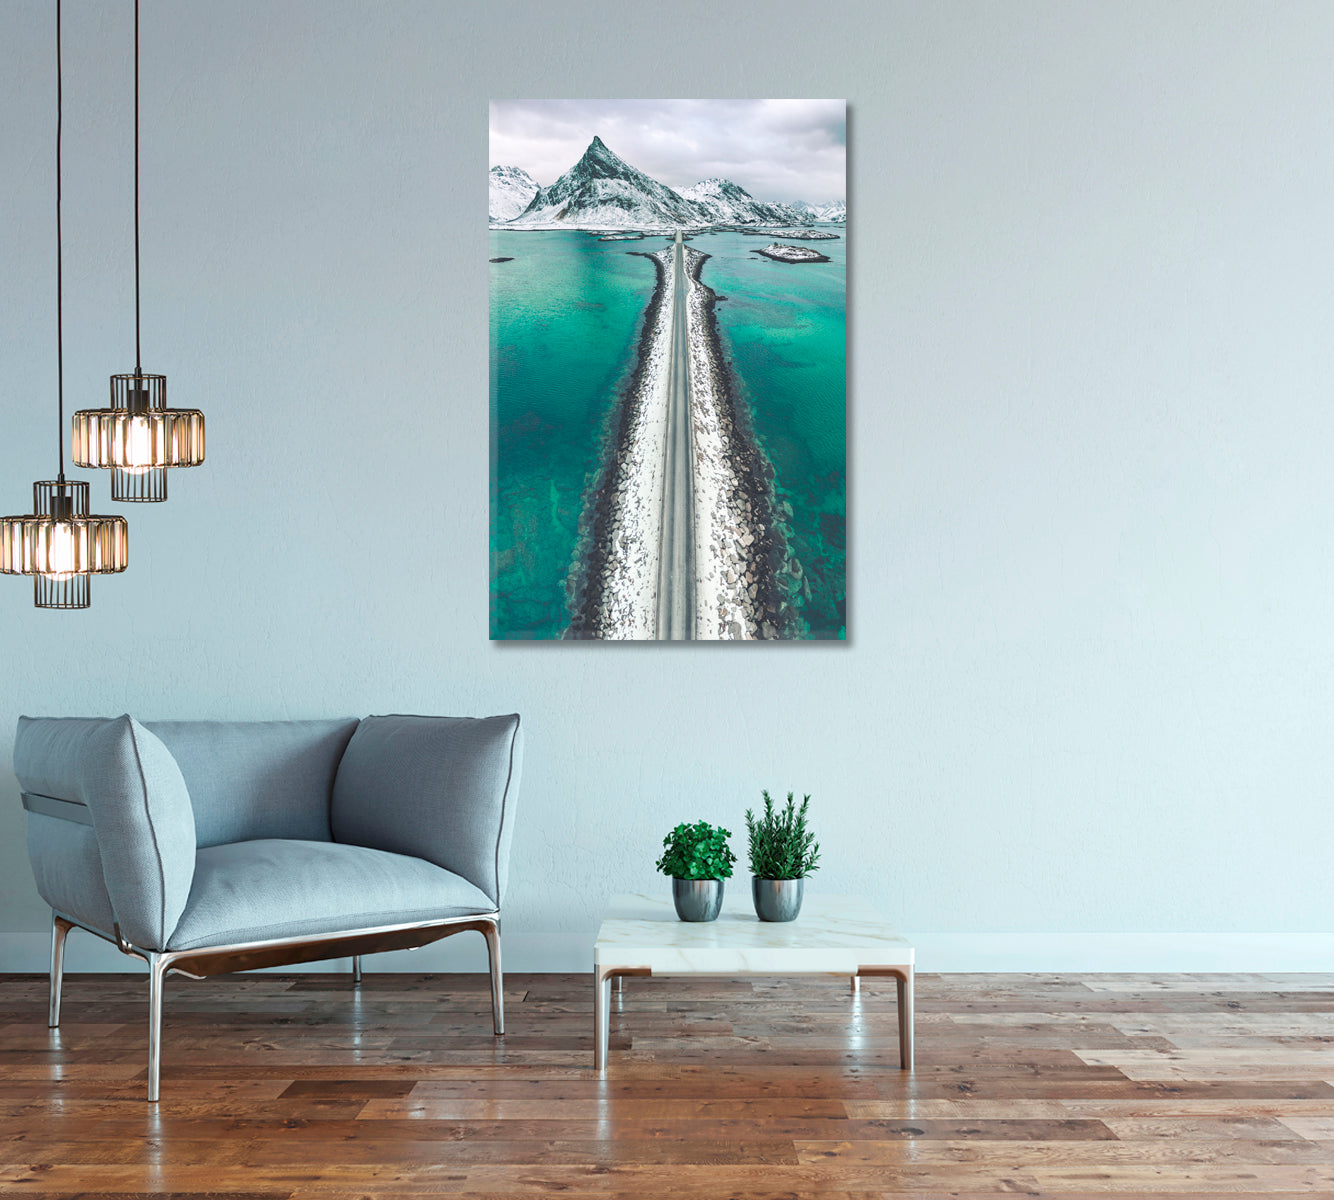 Ostend Mount And Asphalt Road Lofoten Islands Norway Canvas Print-Canvas Print-CetArt-1 panel-16x24 inches-CetArt